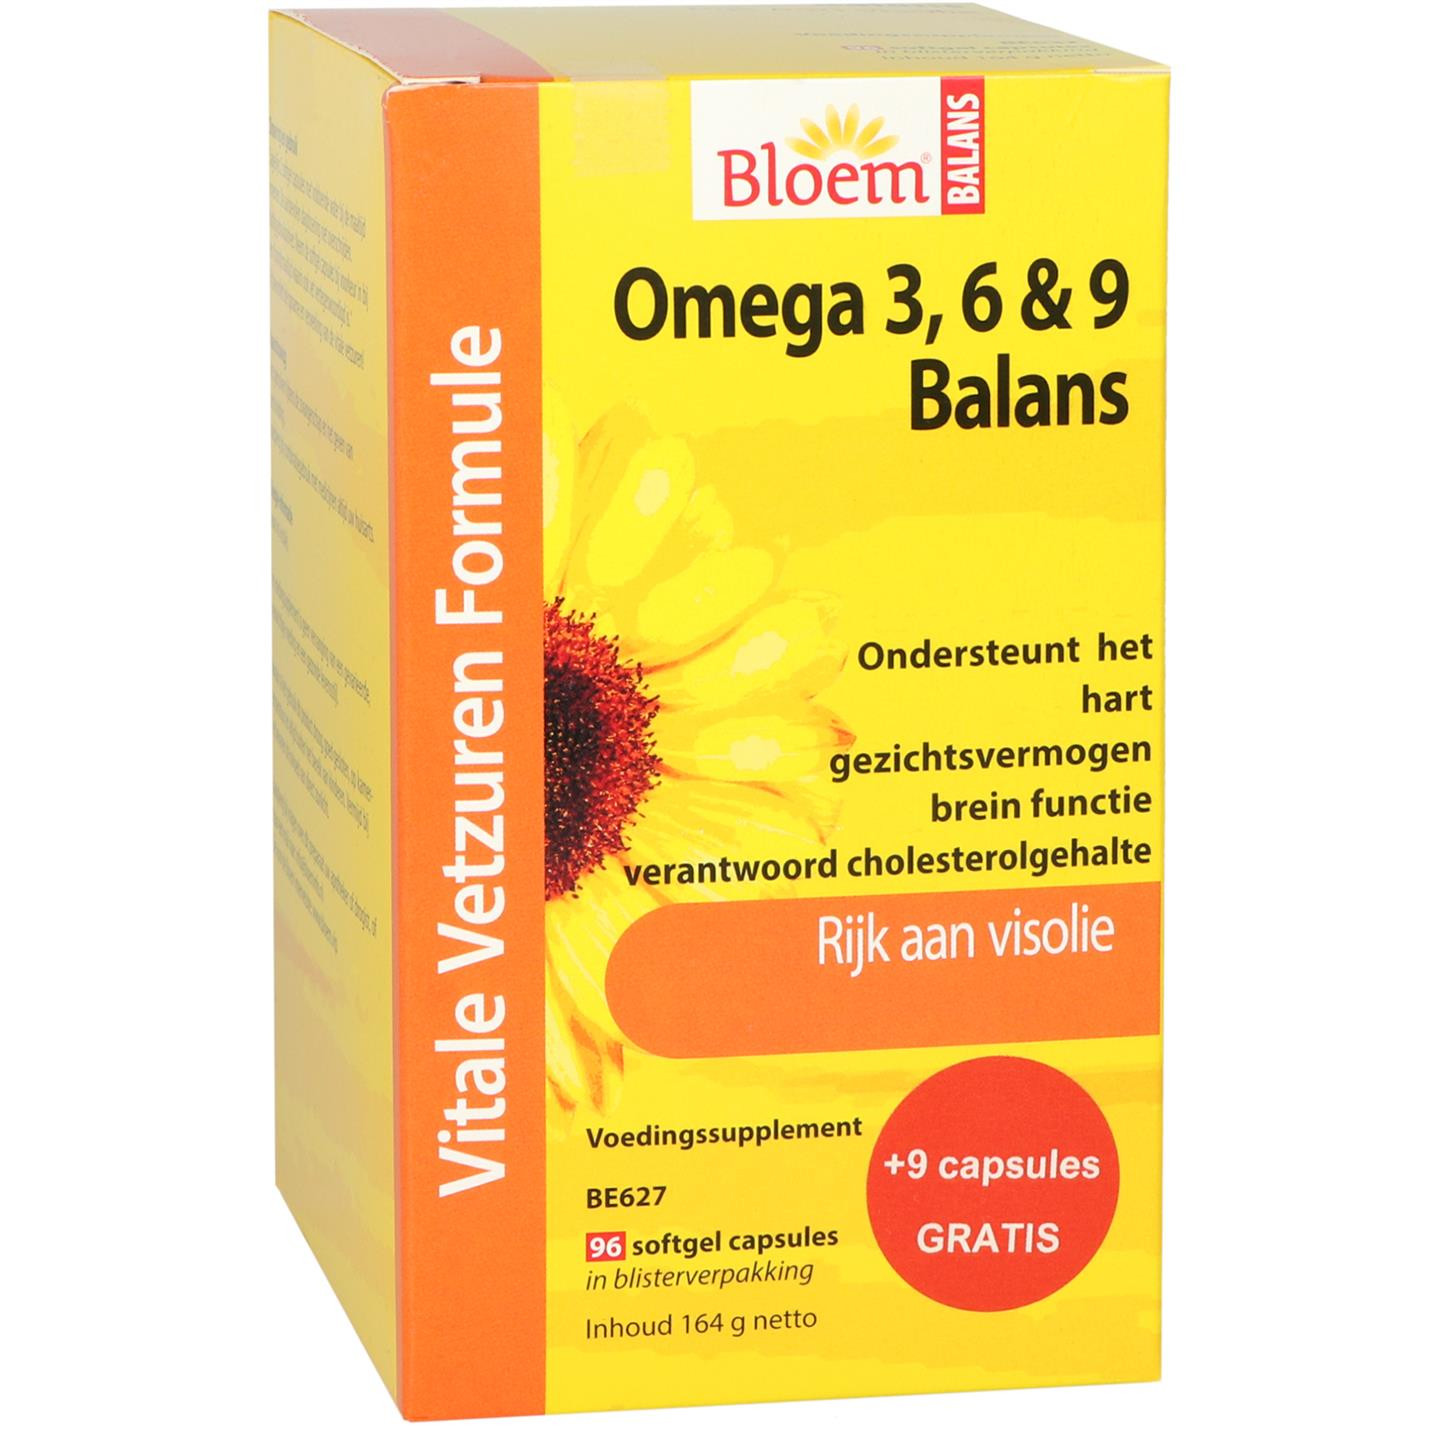 Omega 3, 6 & 9 Balans